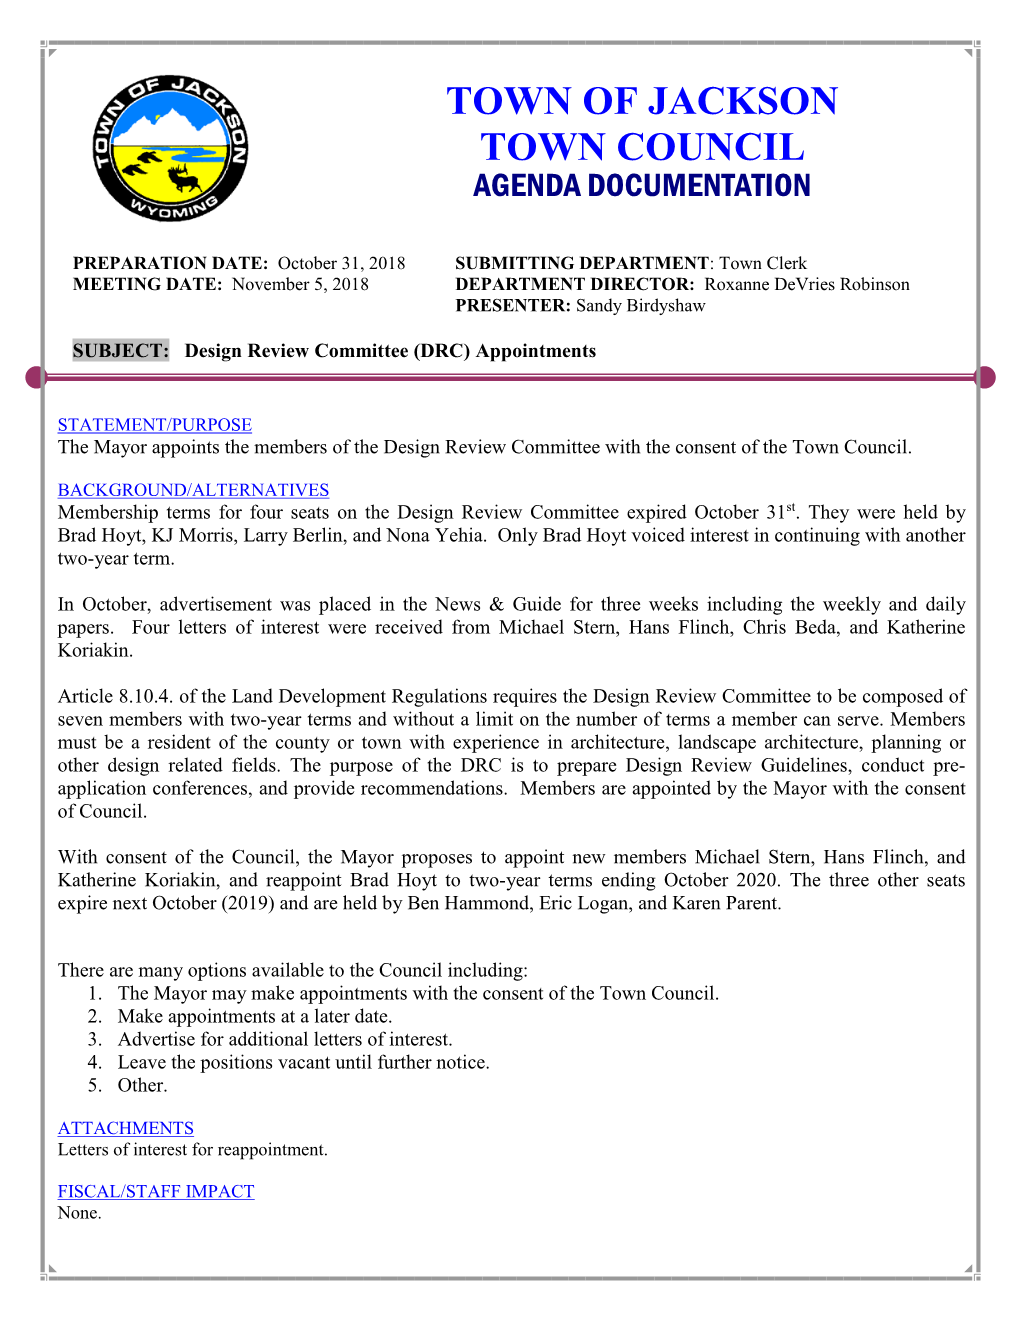 Town of Jackson Town Council Agenda Documentation